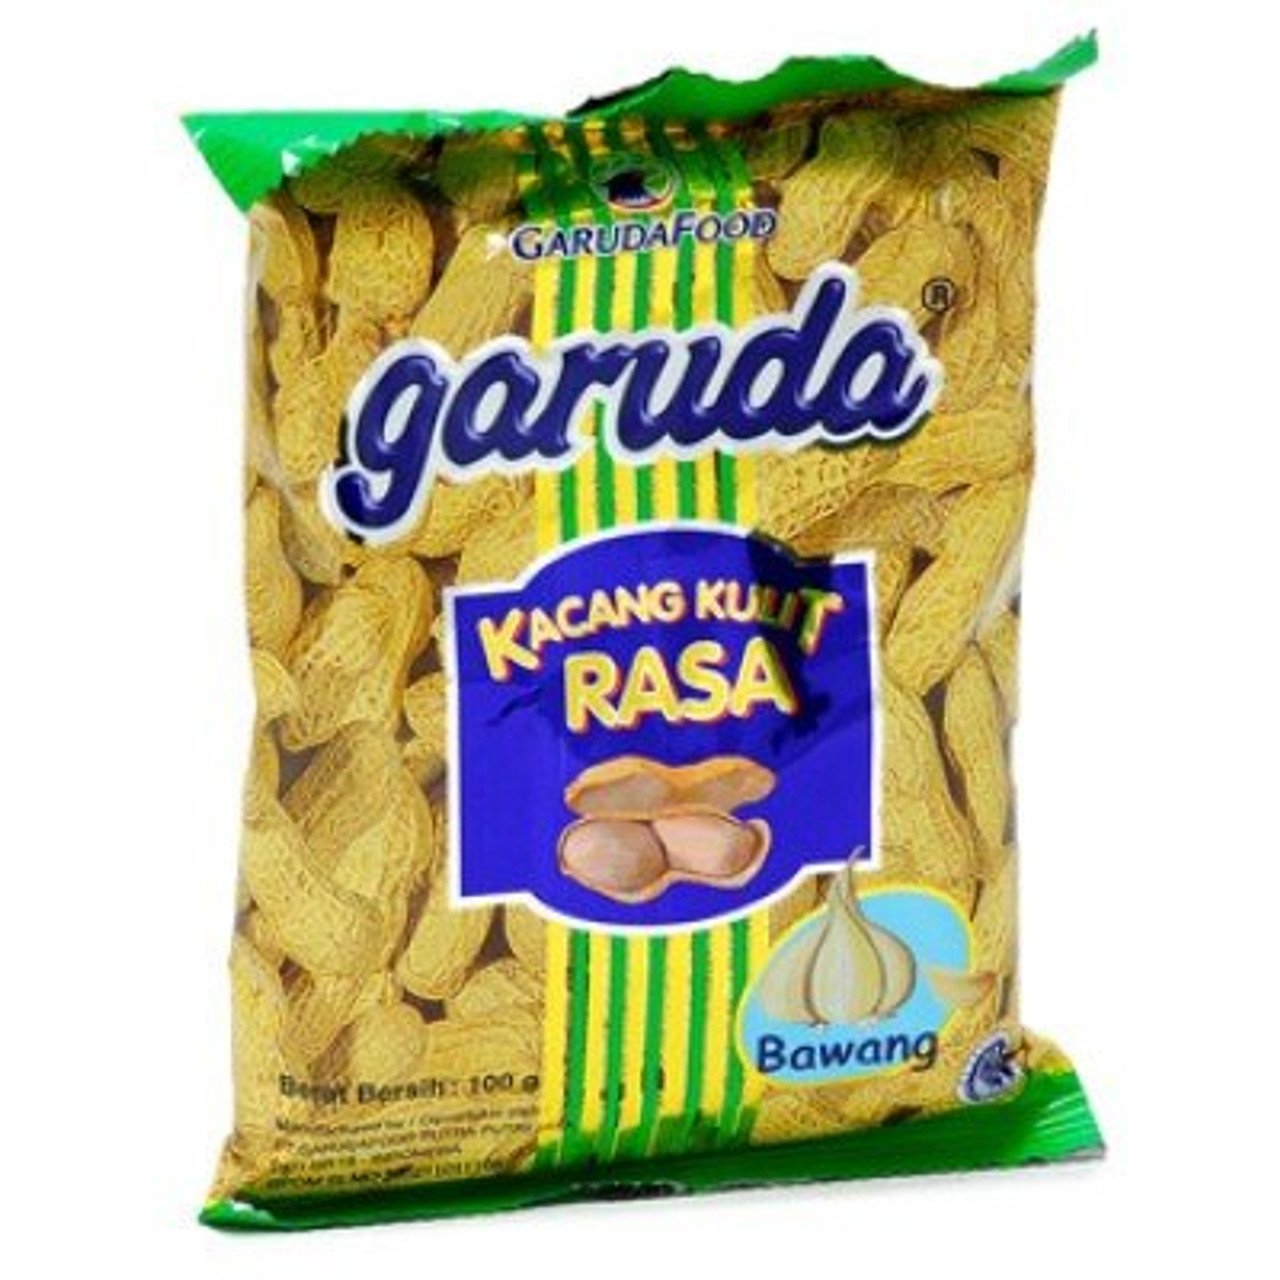 Garuda Food Kacang Kulit Rasa Bawang - Roasted Peanuts Garlic Flavor, 2.66 Oz